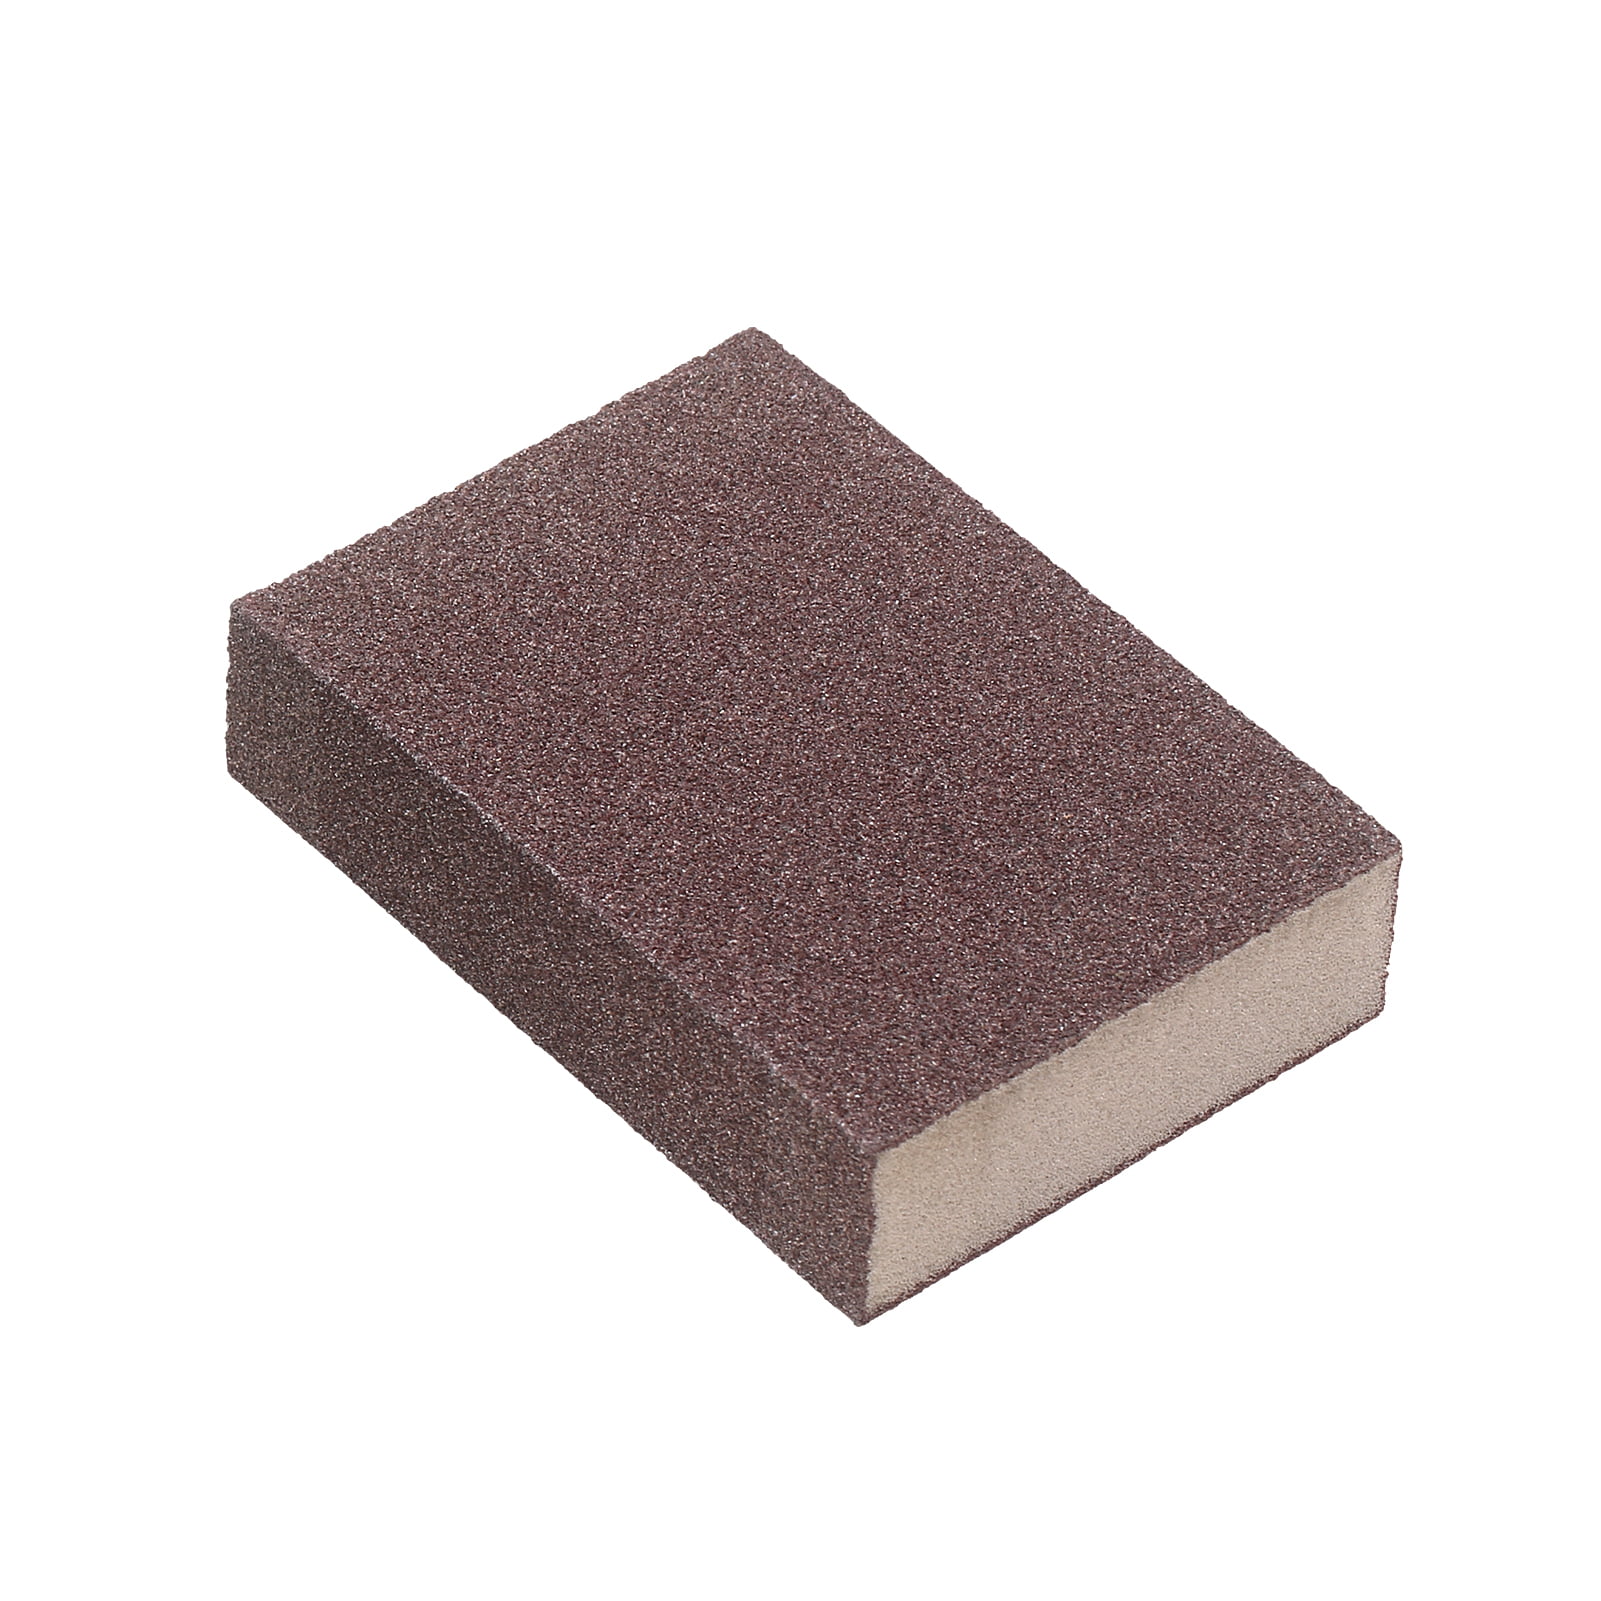 Washable and Reusable Sand Sponges Kit LUTER 4 Pieces Sponge Set Sanding Coarse/Medium/Fine/Superfine 4 Different Specifications Sand Block Assortment 